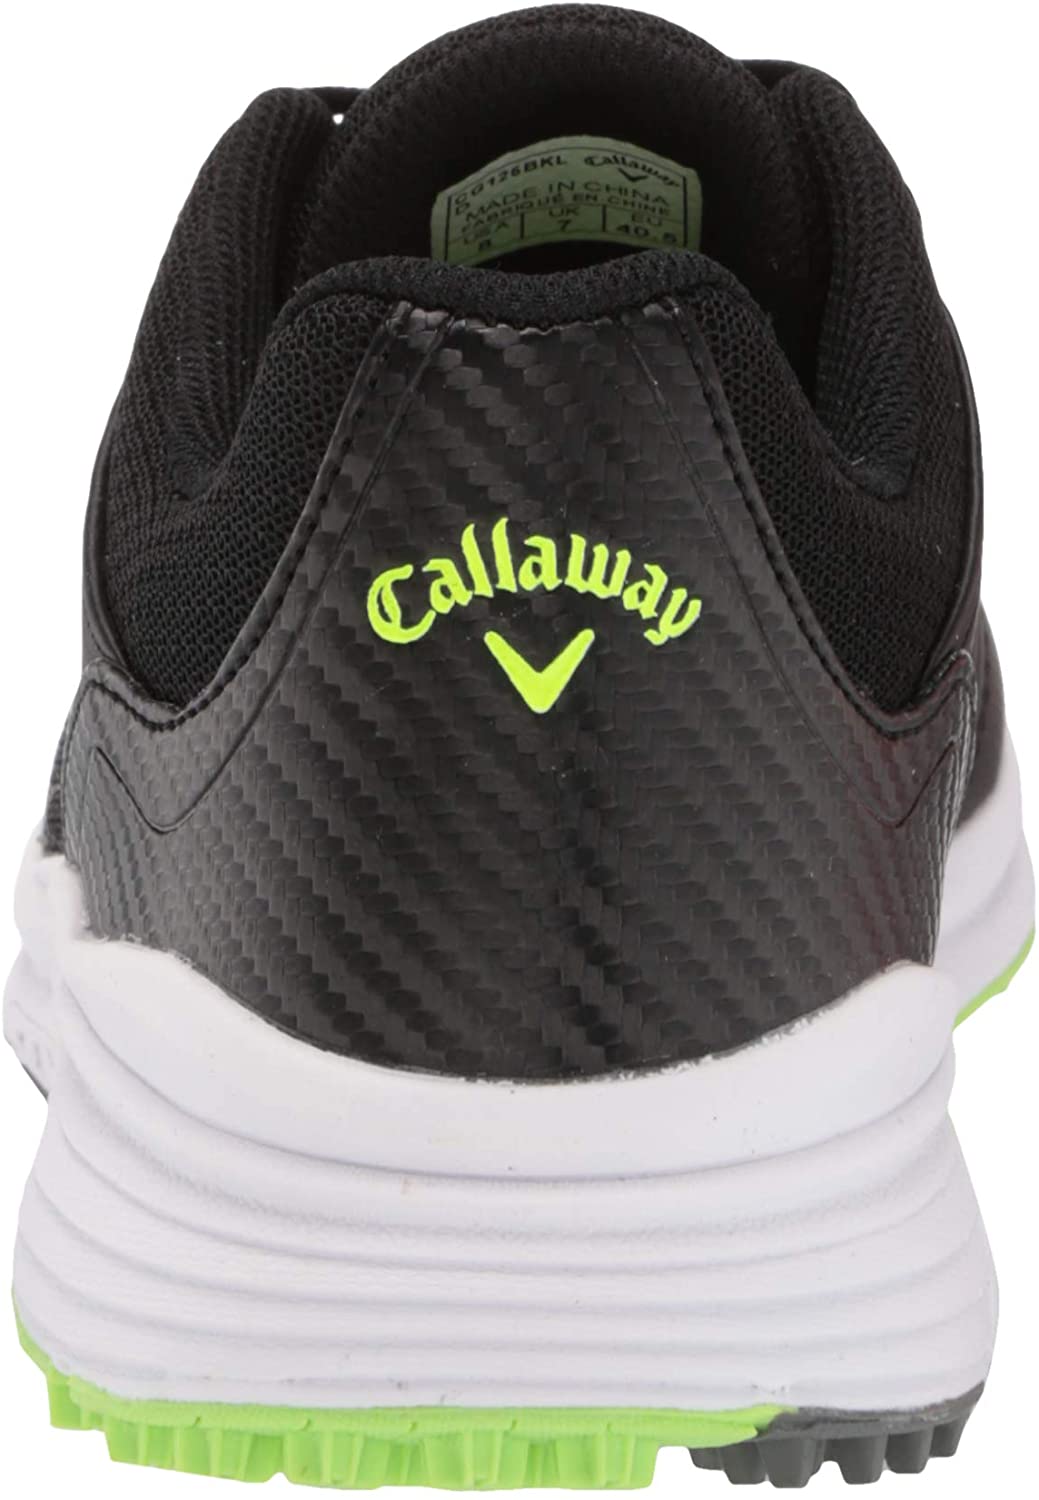 Callaway Mens Solana Sl Golf Shoe 15 Black/Lime - image 3 of 8